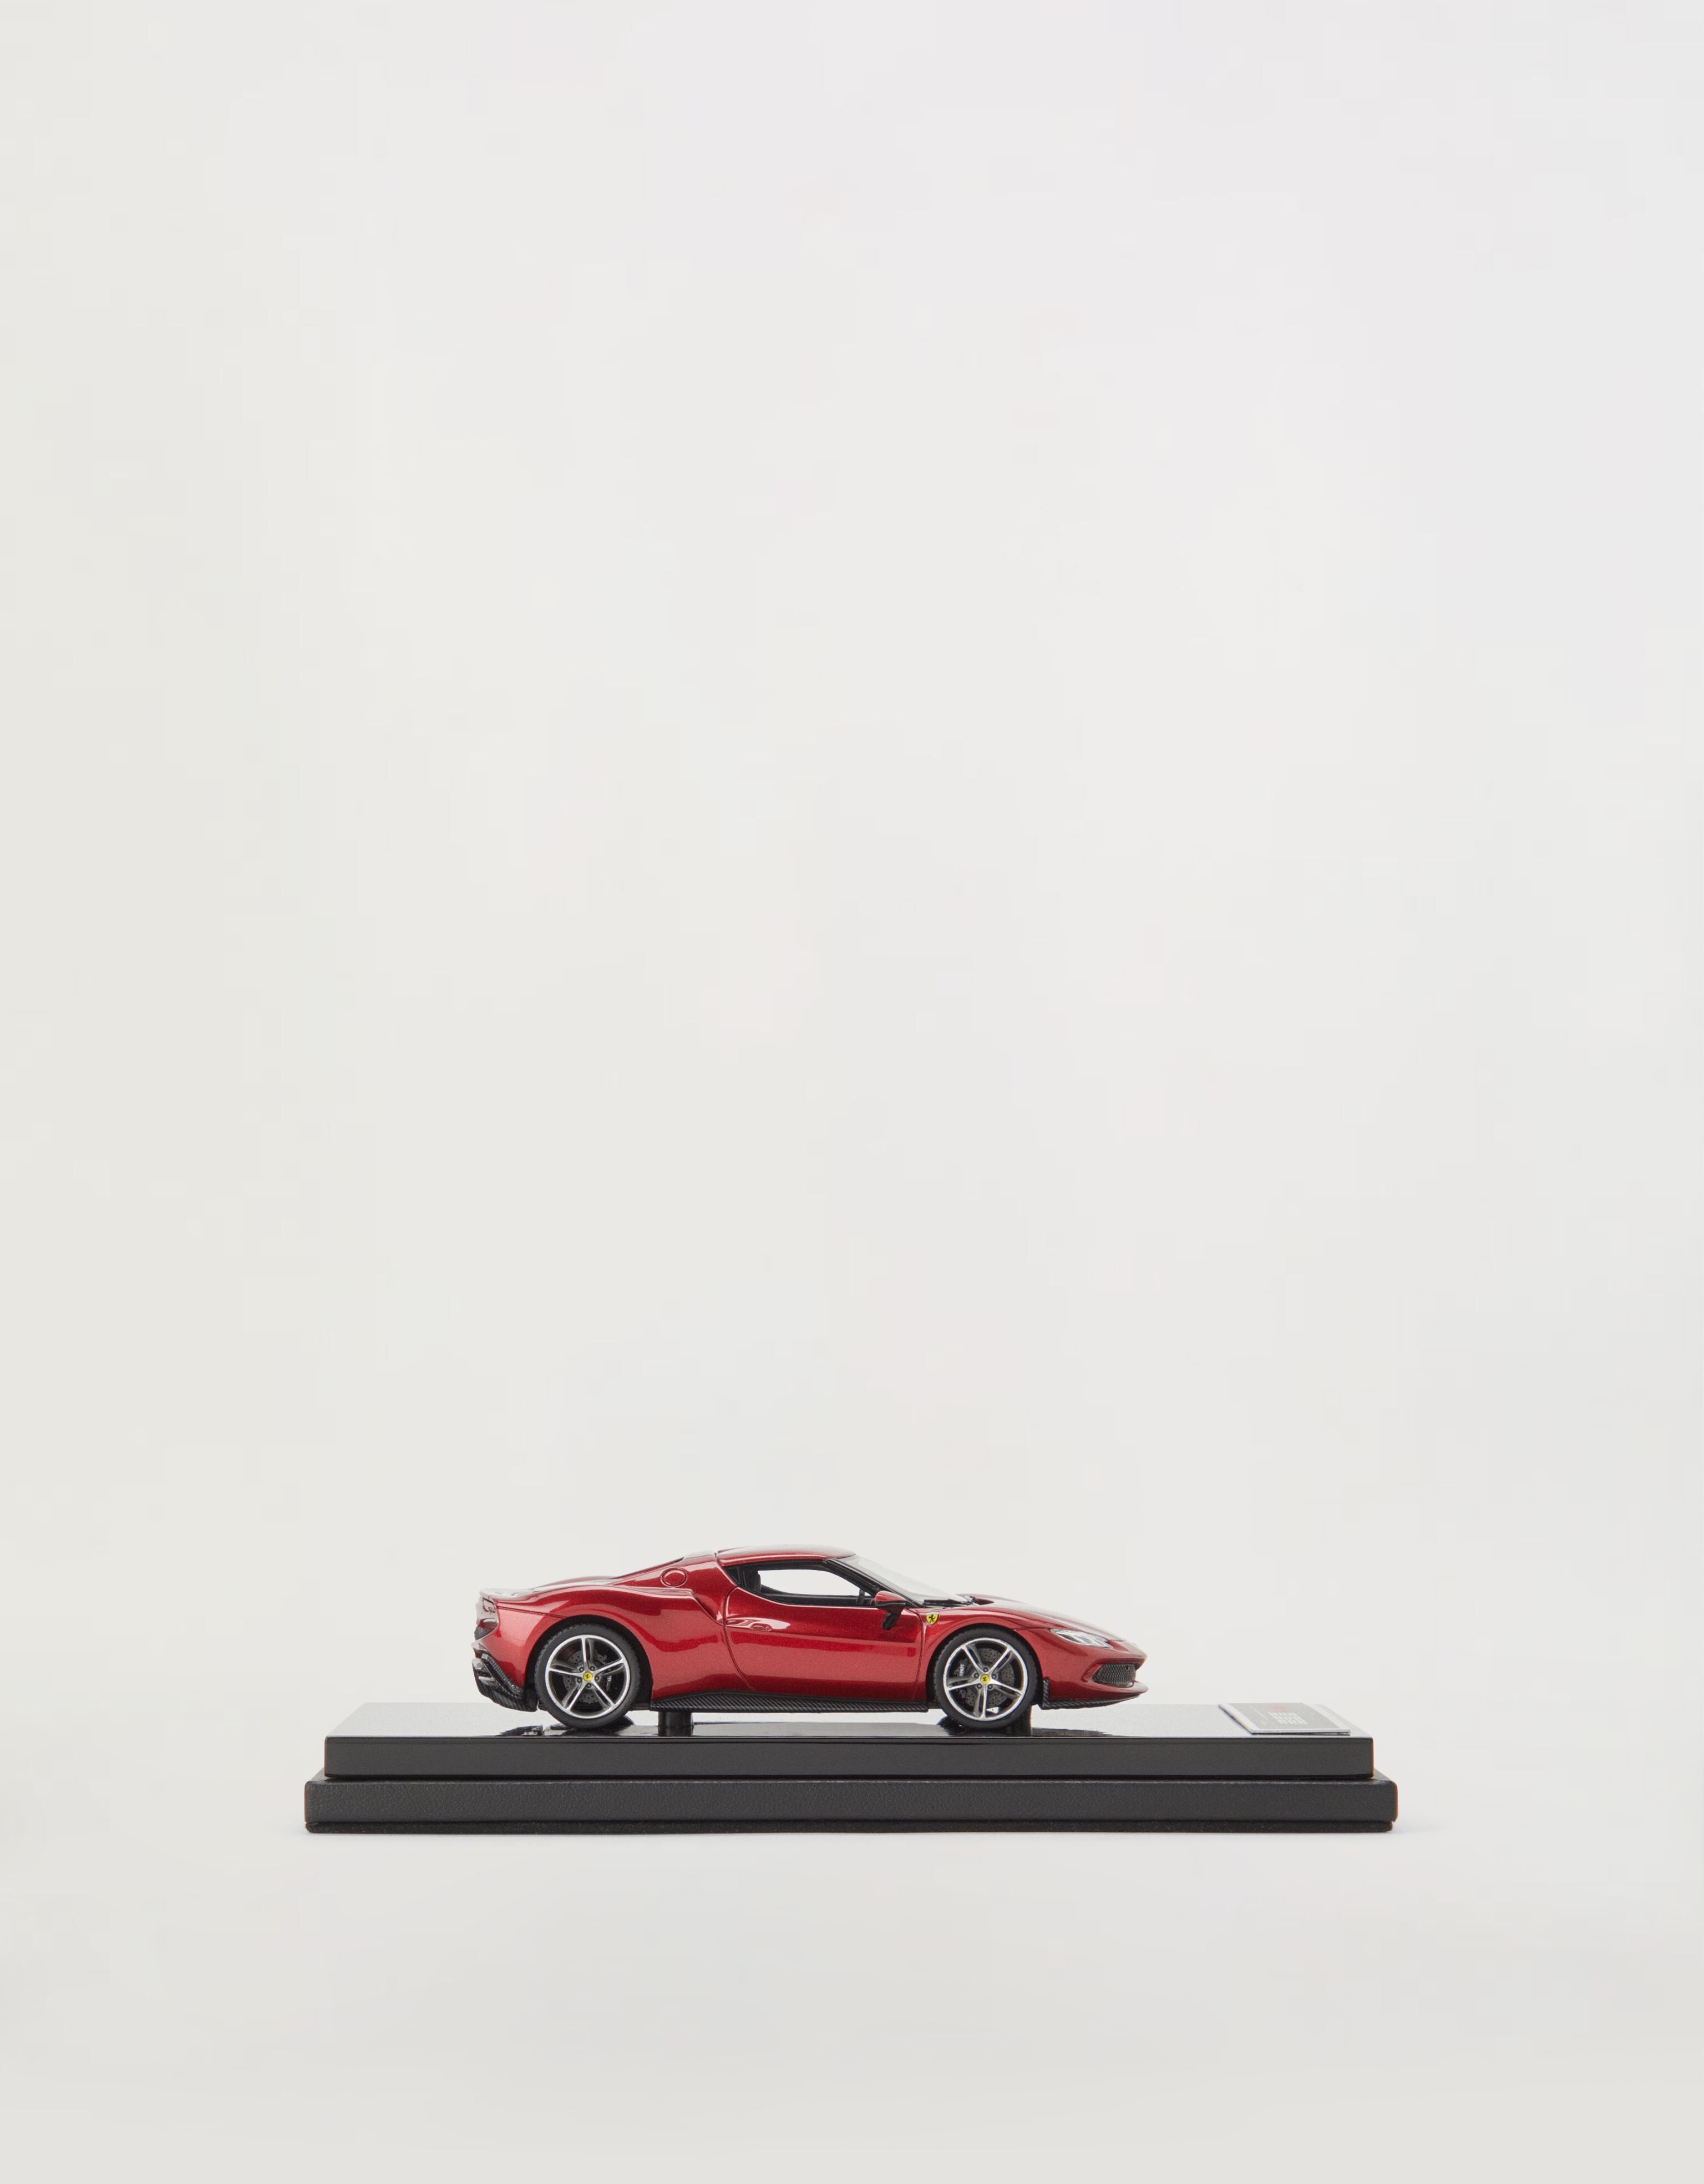 Ferrari Ferrari 296 GTB model in 1:43 scale MULTICOLOUR L7595f